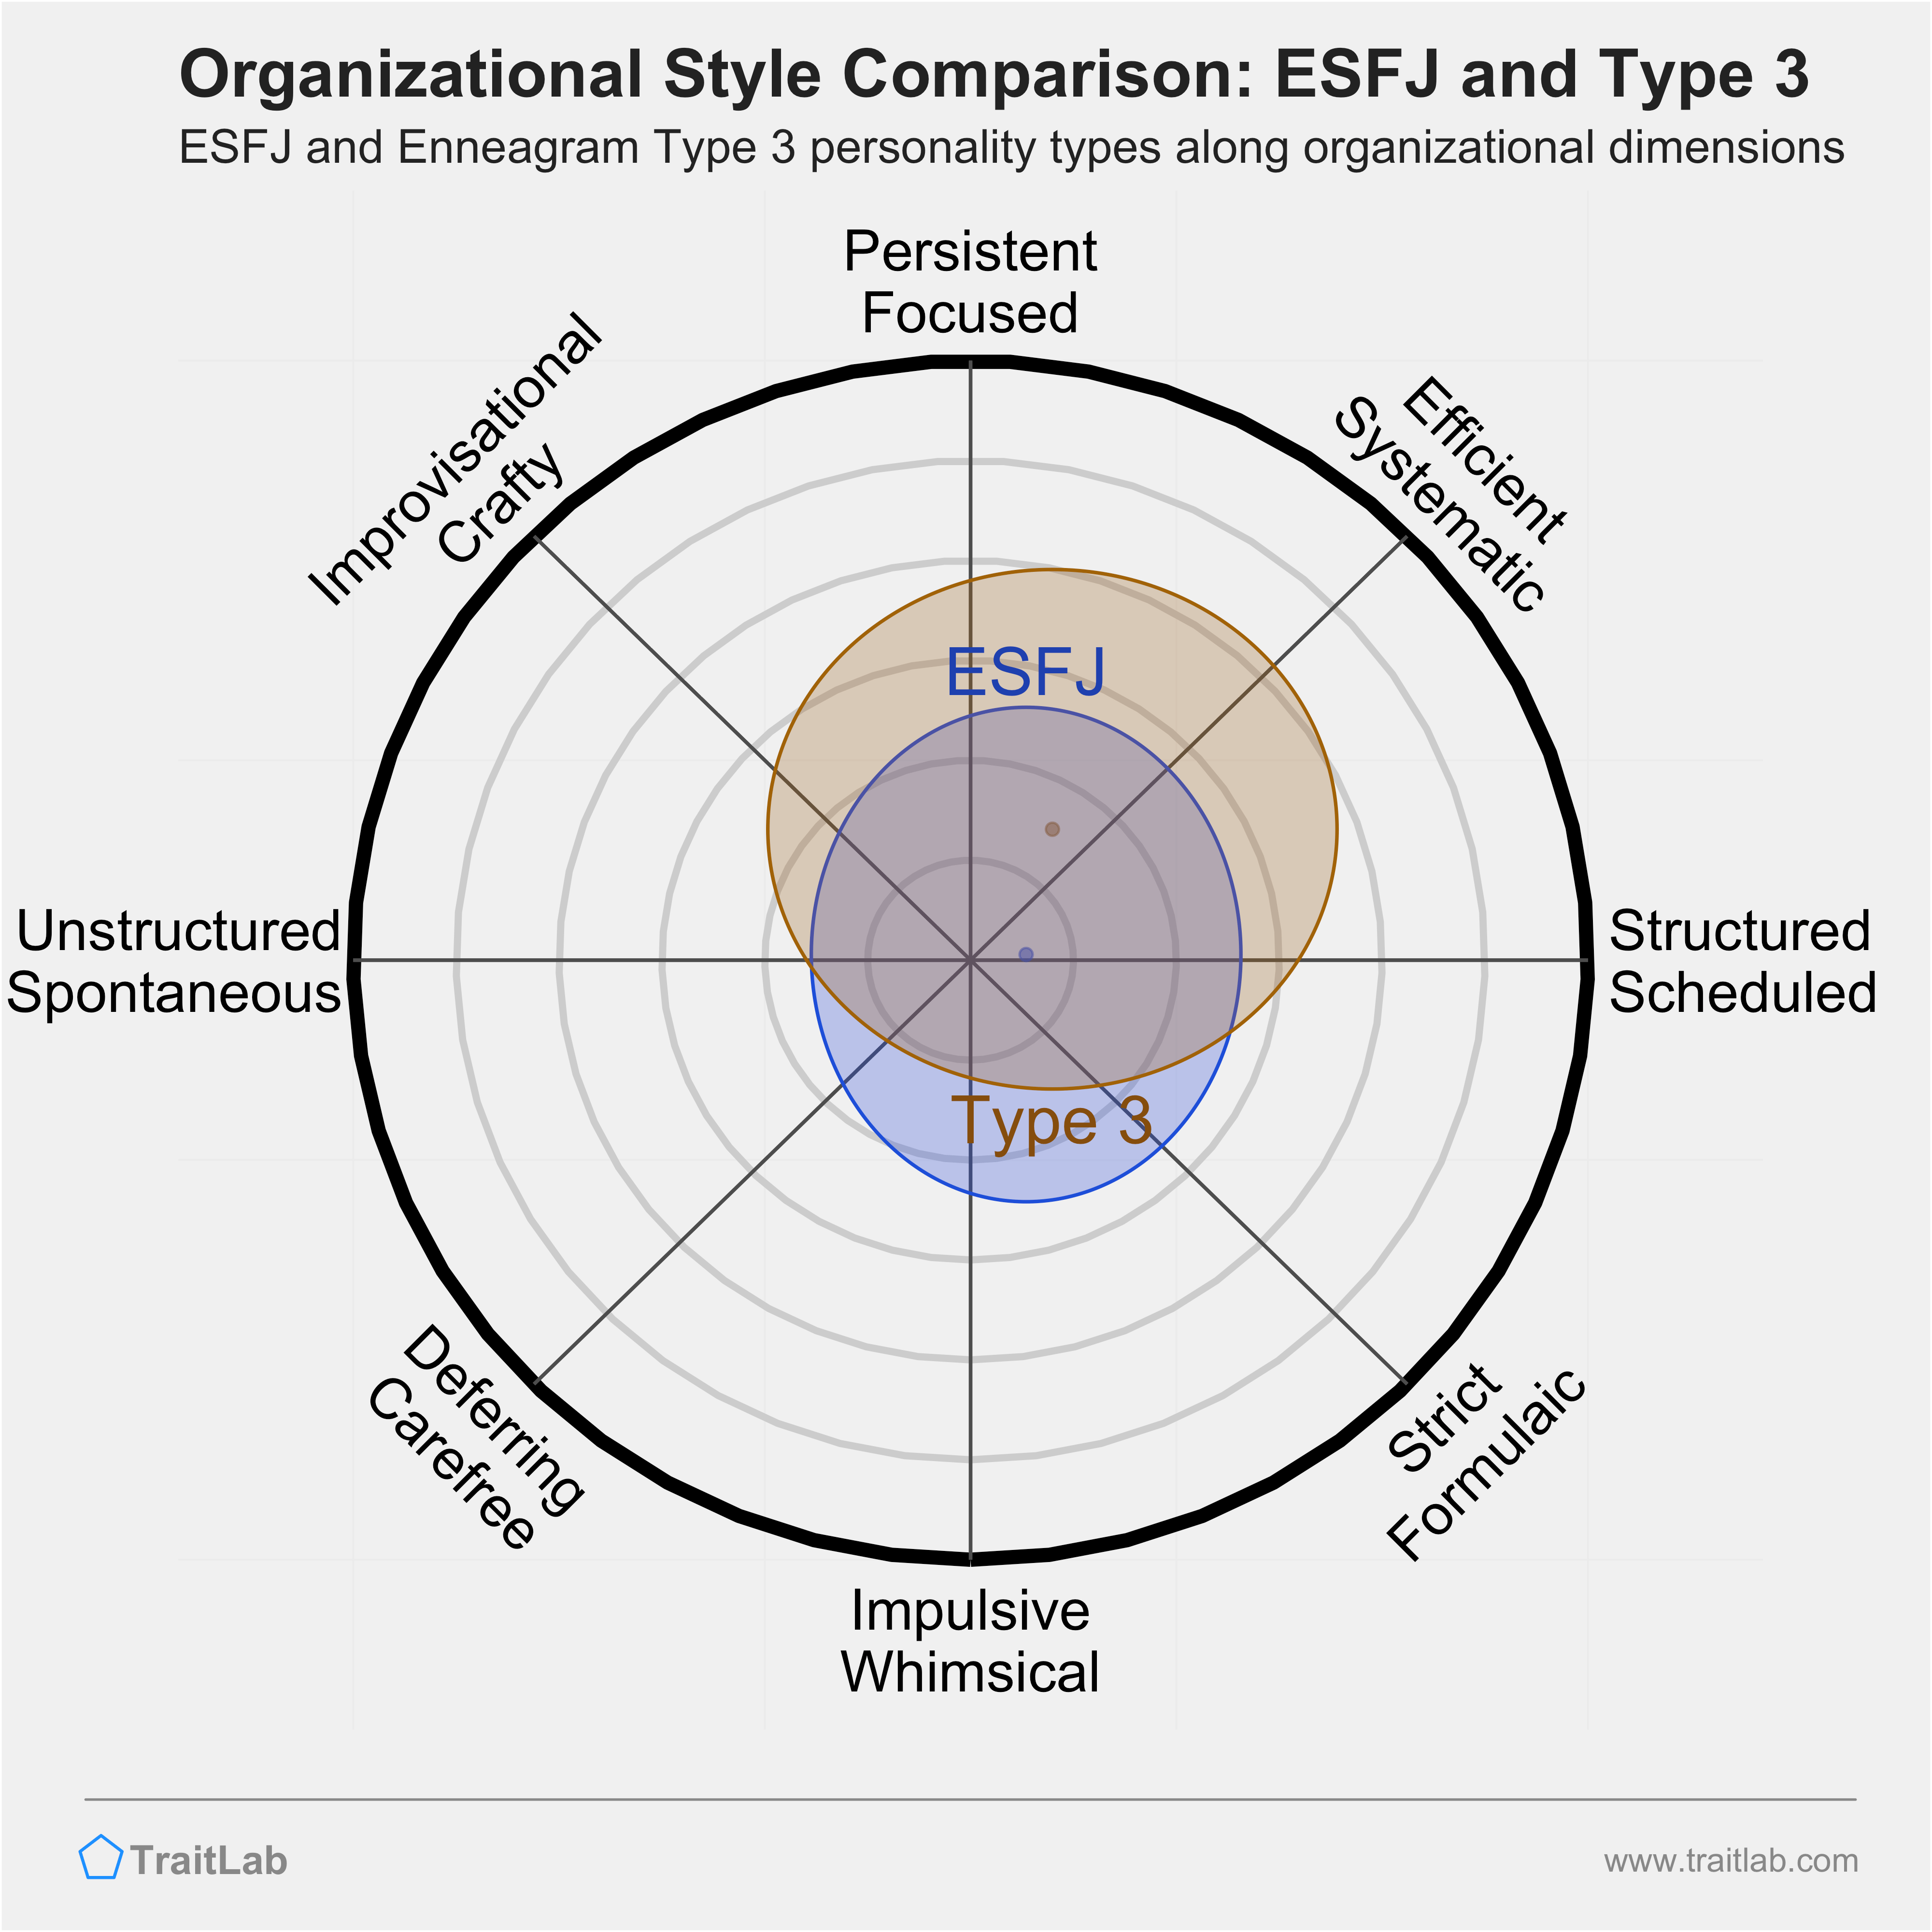 ESFJ and Type 3 comparison across organizational dimensions